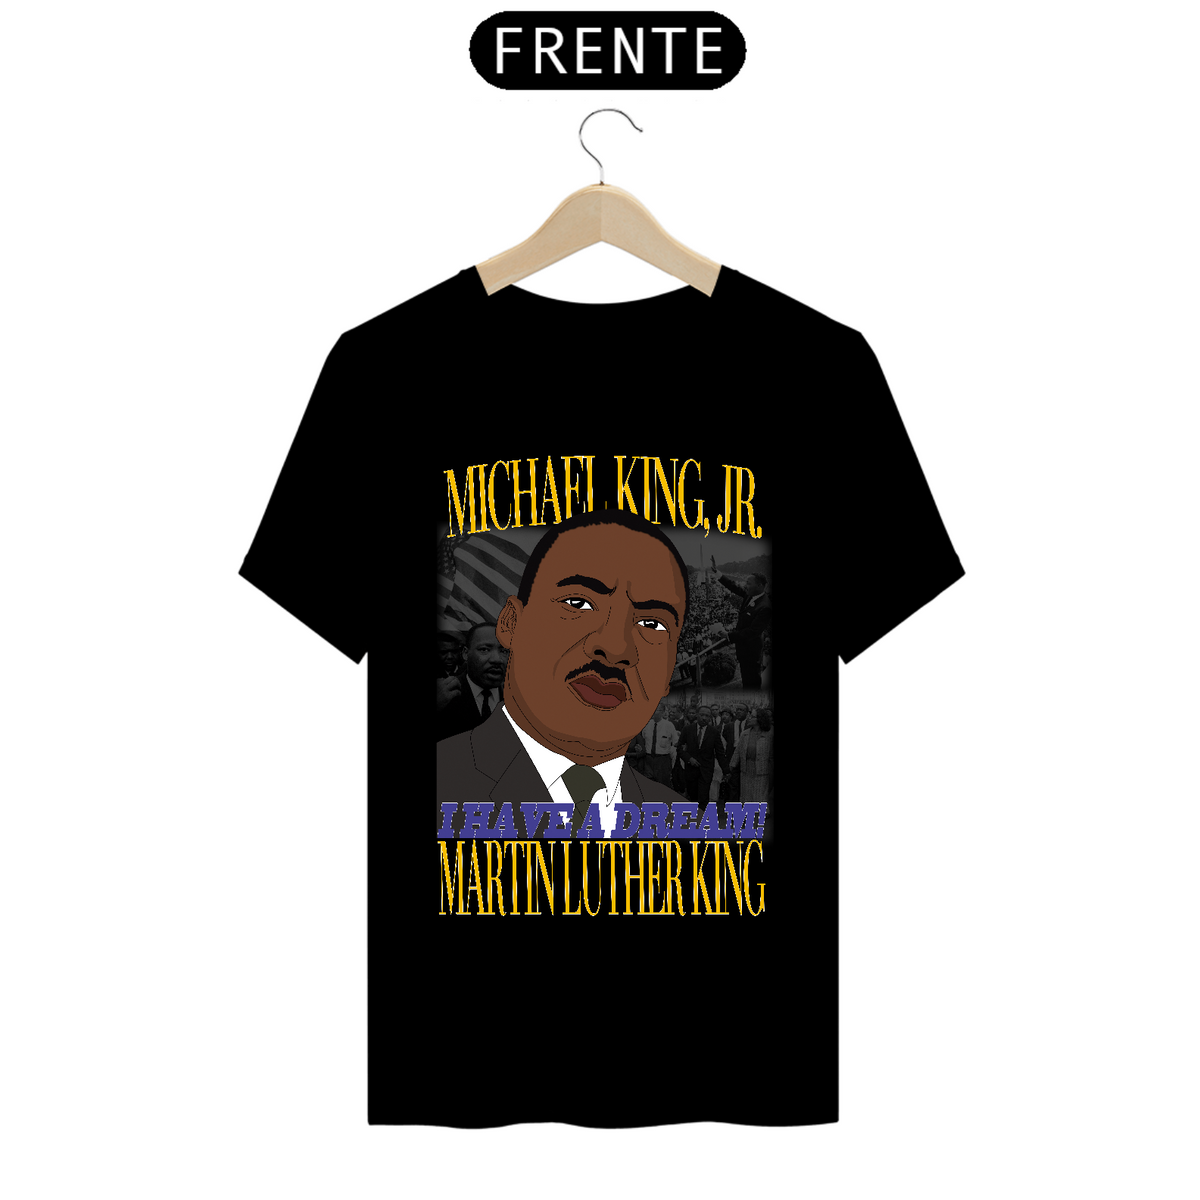 Nome do produto: Martin Luther King Jr.